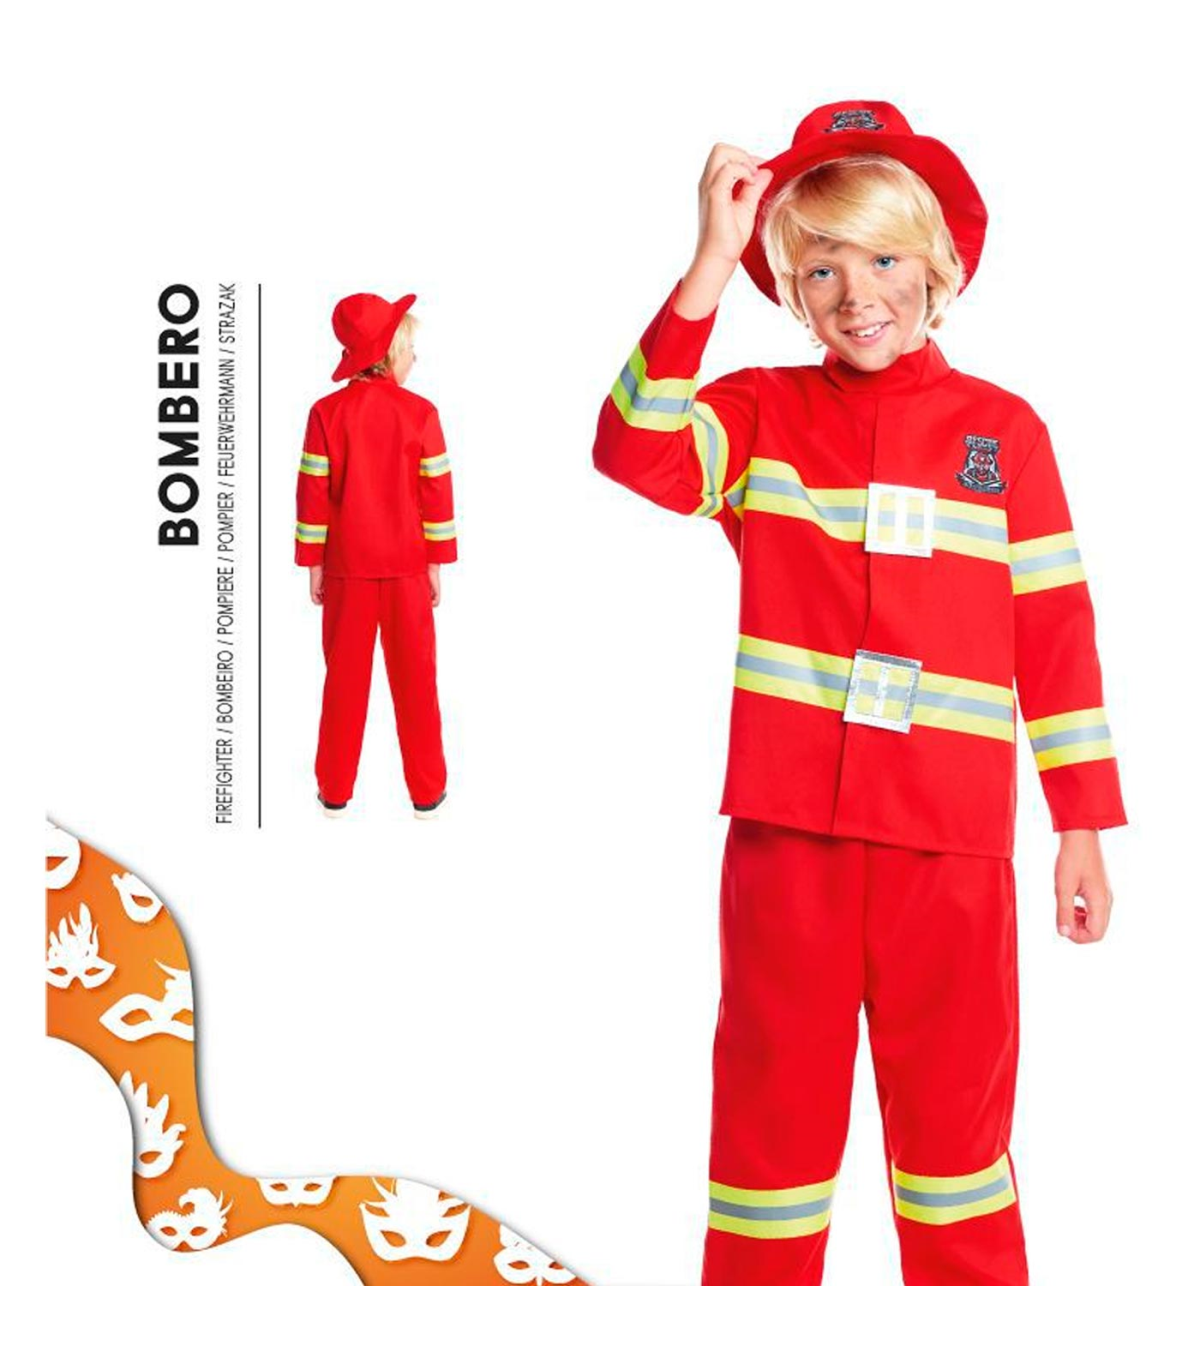 Tradineur - Disfraz de bombero infantil unisex - Fabricado en